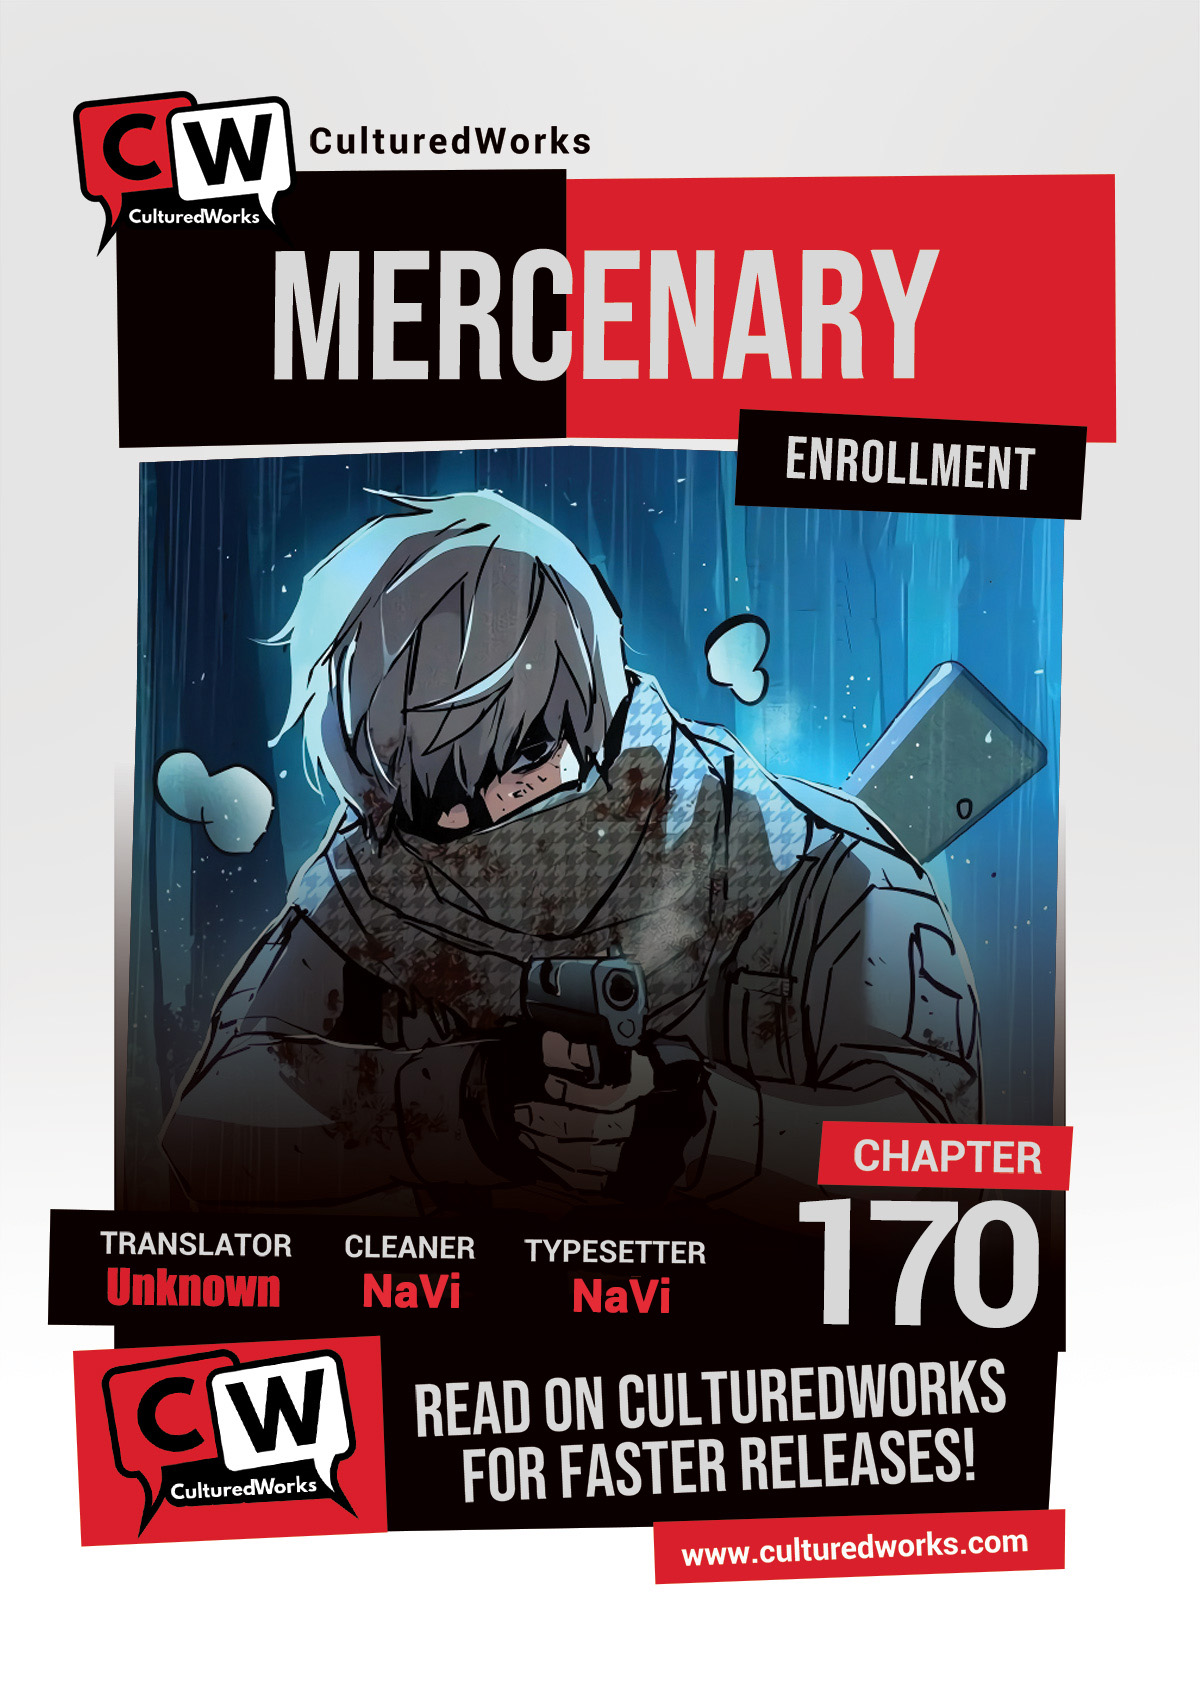 Mercenary Enrollment 170